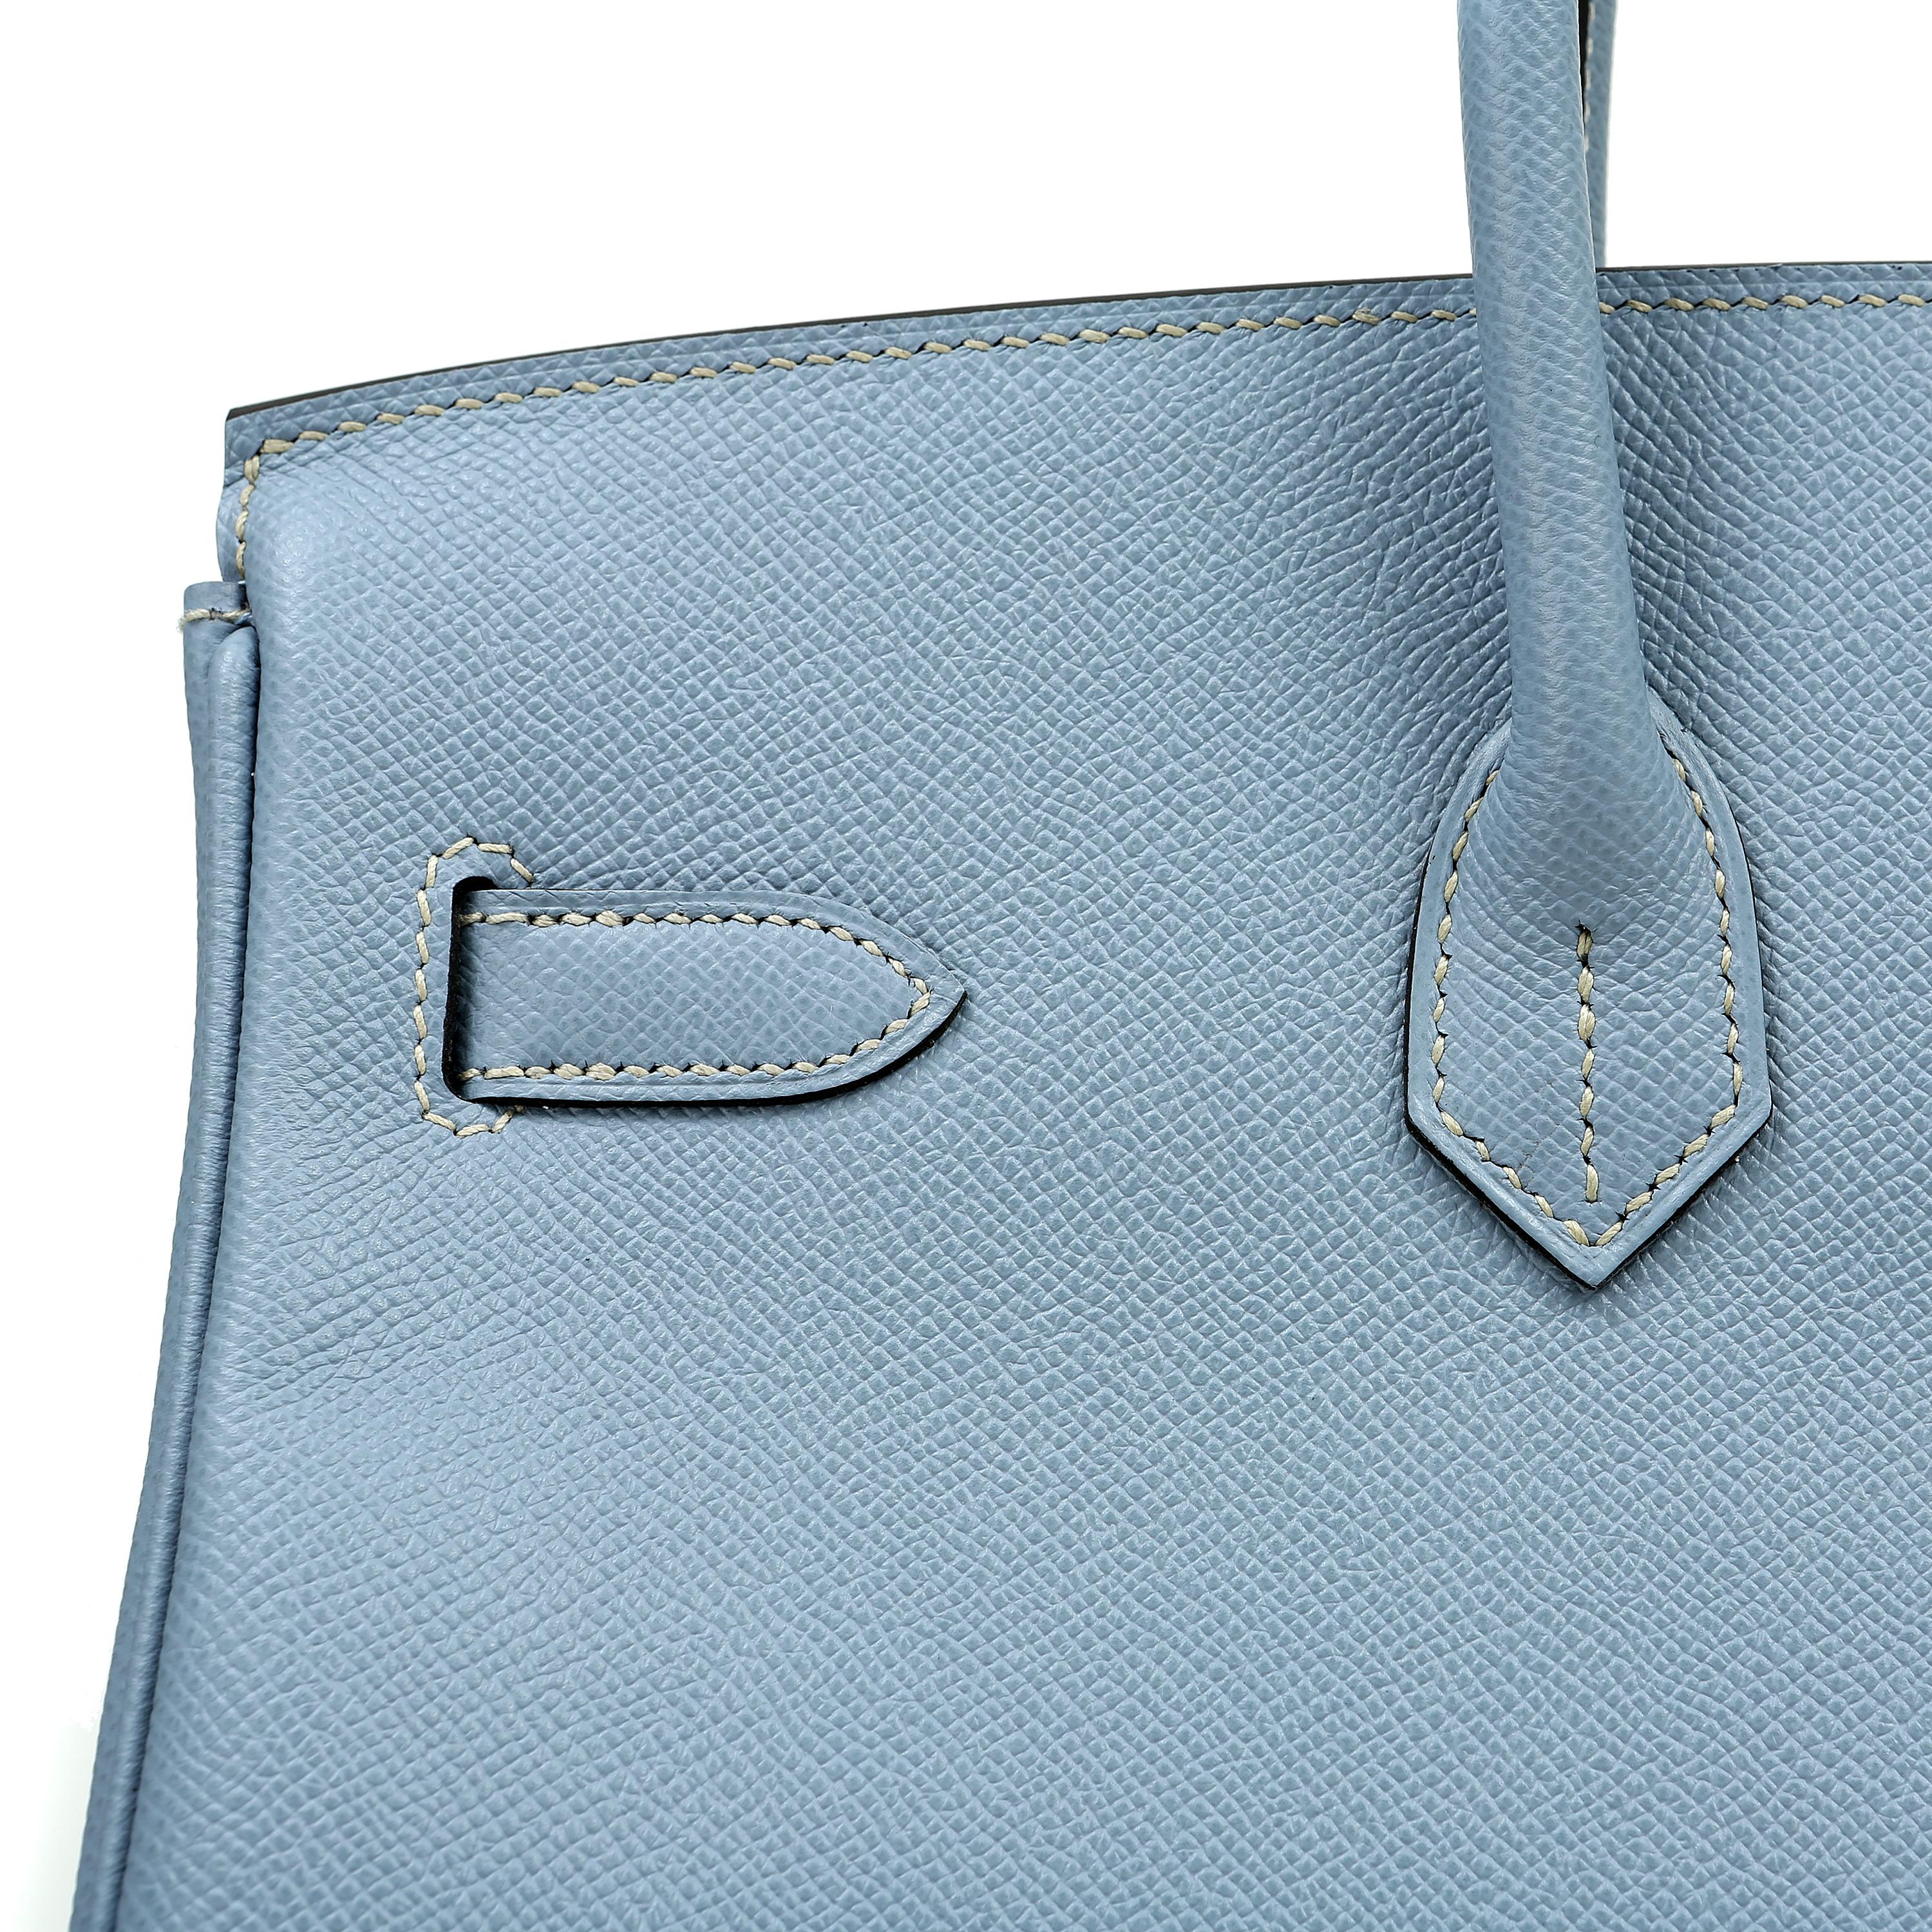 Hermès Bleu Lin Epsom 35 cm Birkin Bag 2